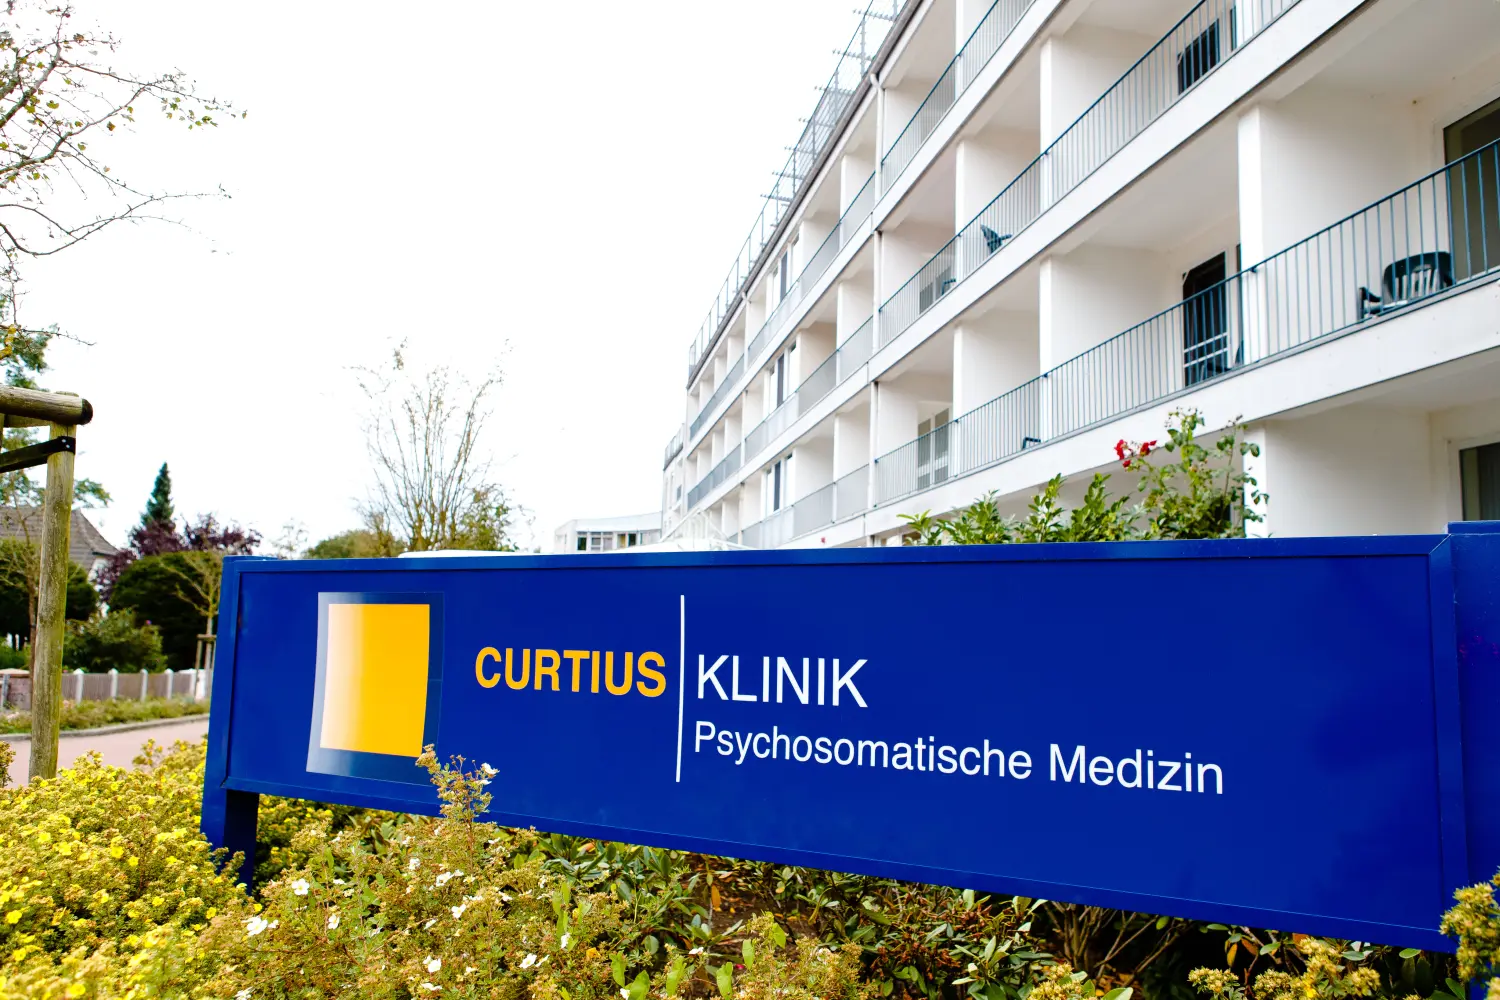 Curtius Klinik